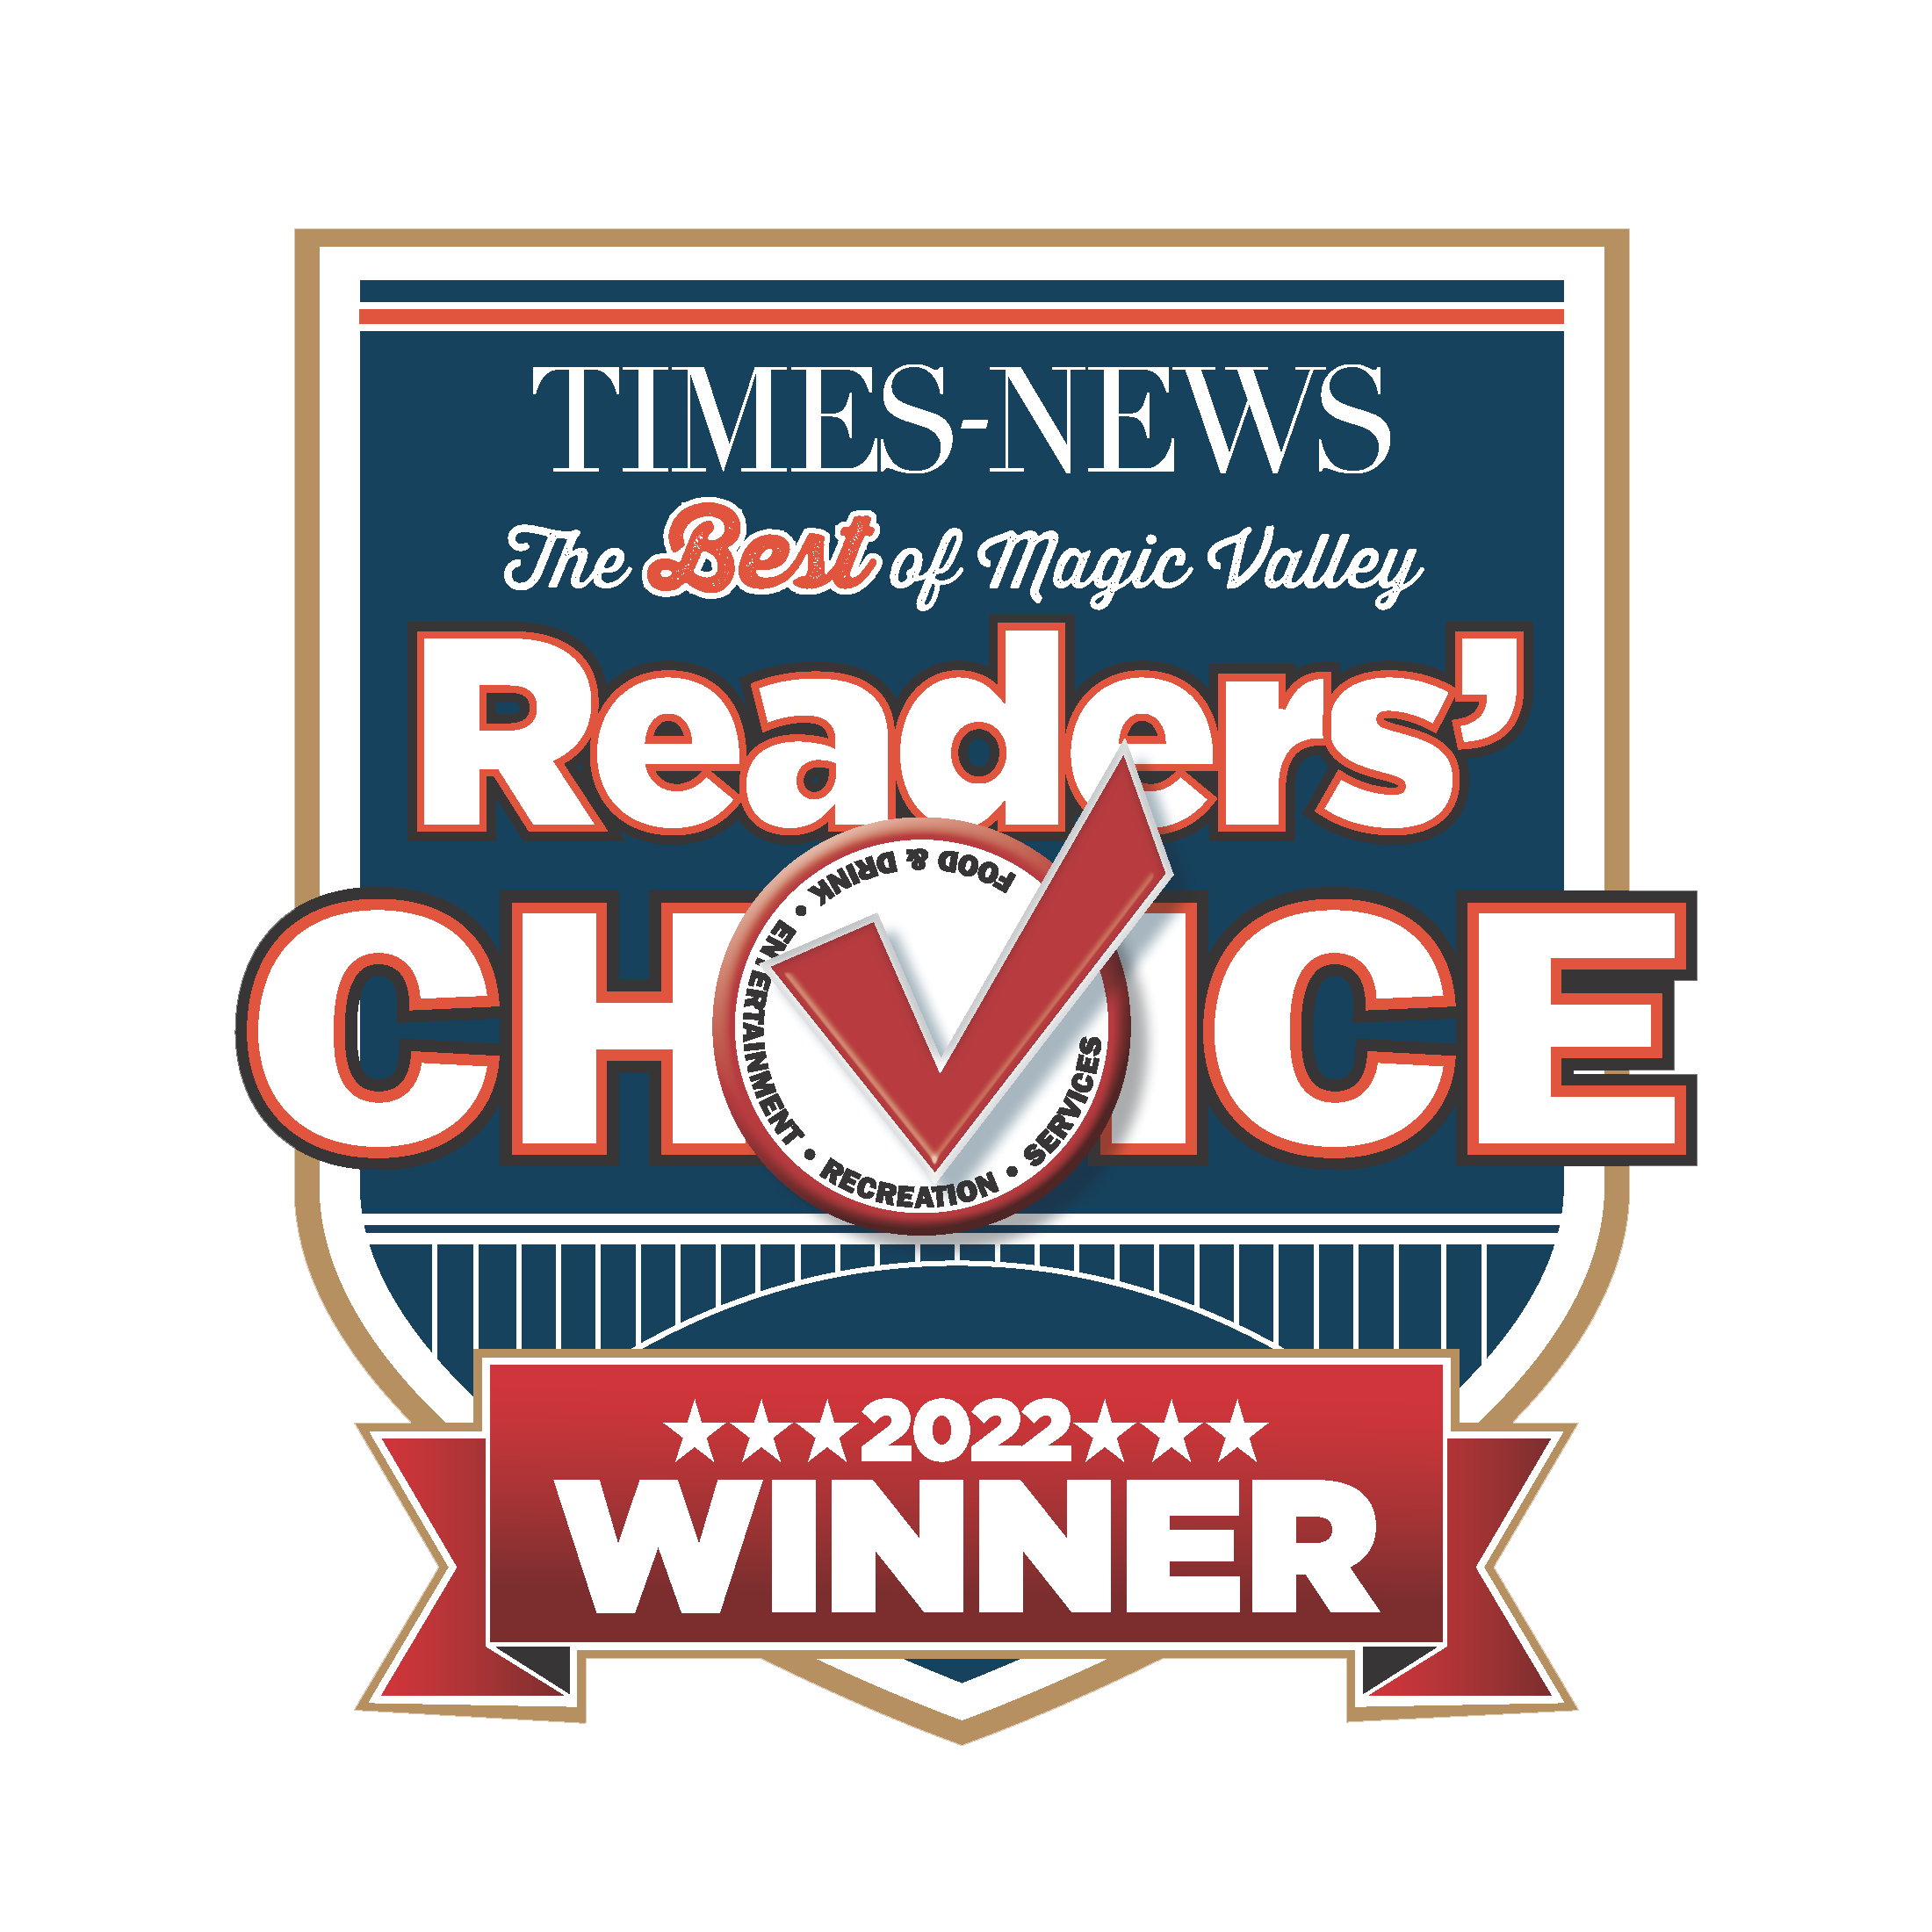 Times-News Readers Choice 2022 Winner